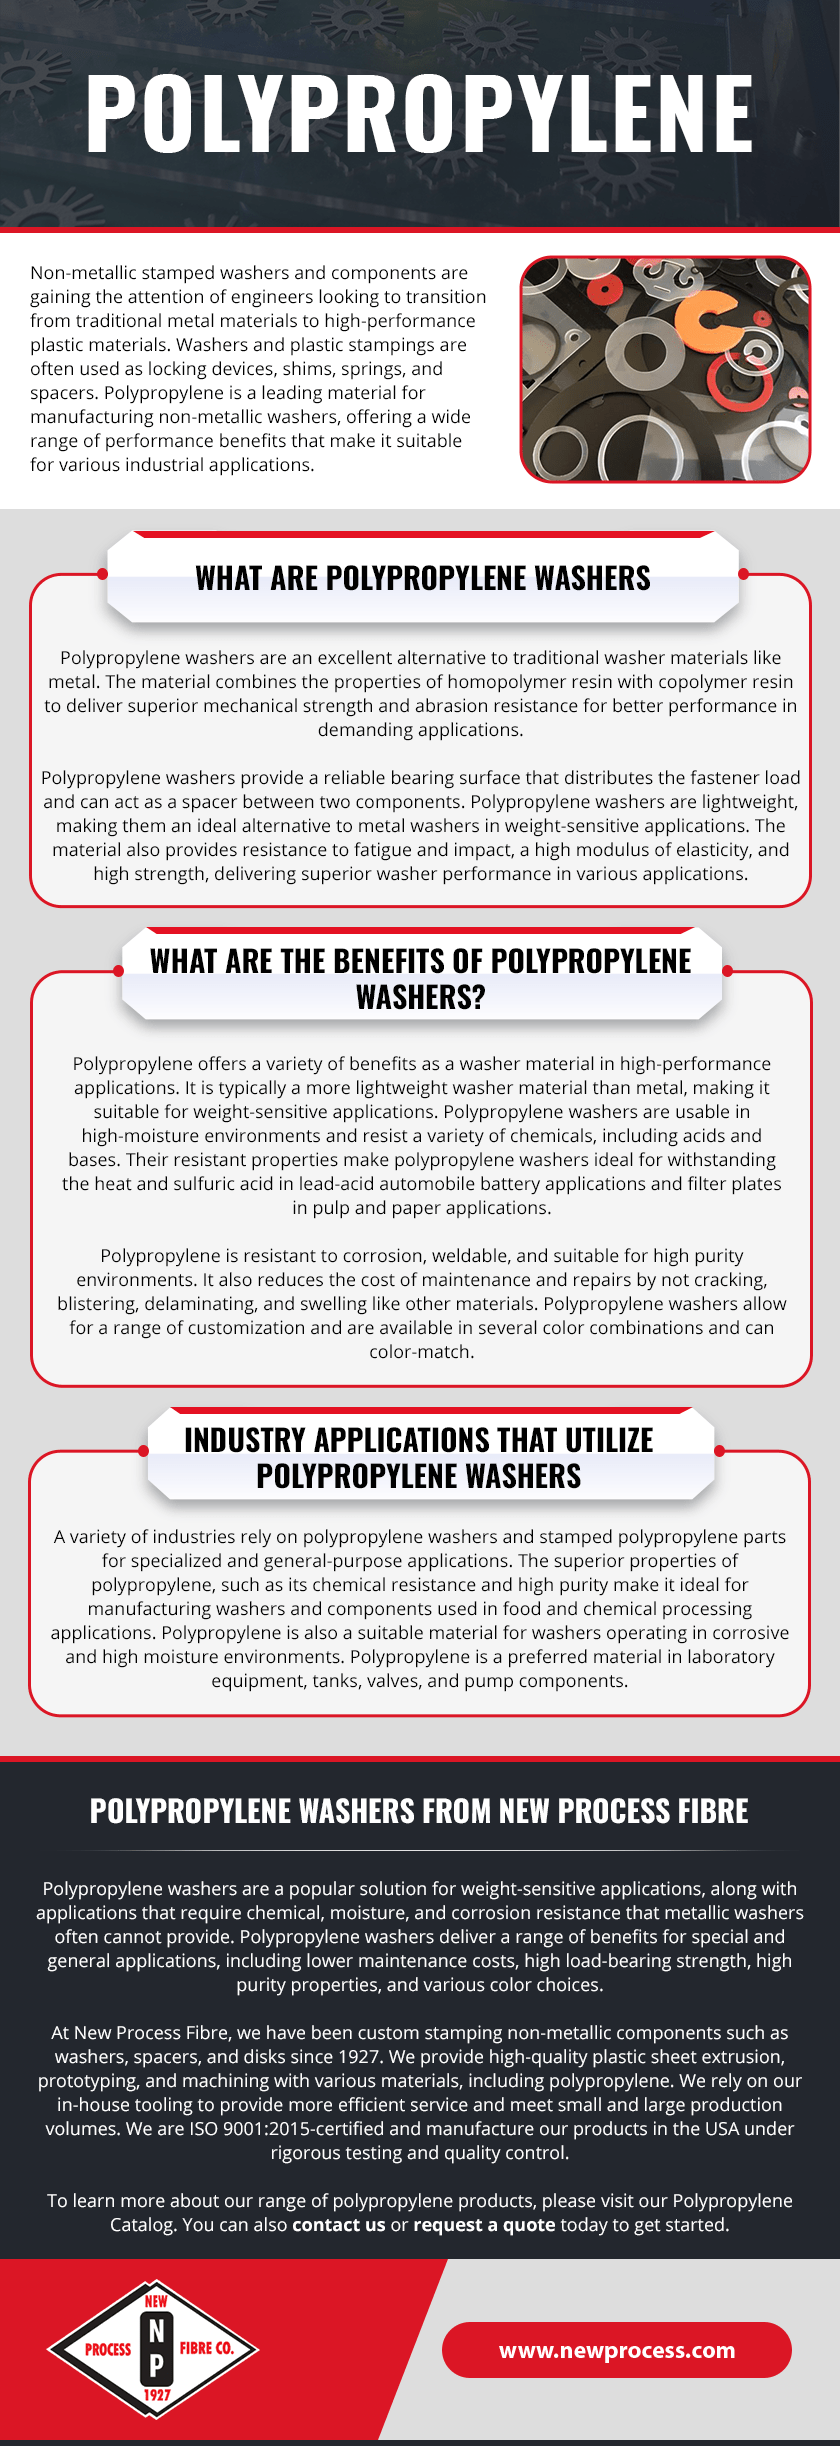 Polypropylene infographic